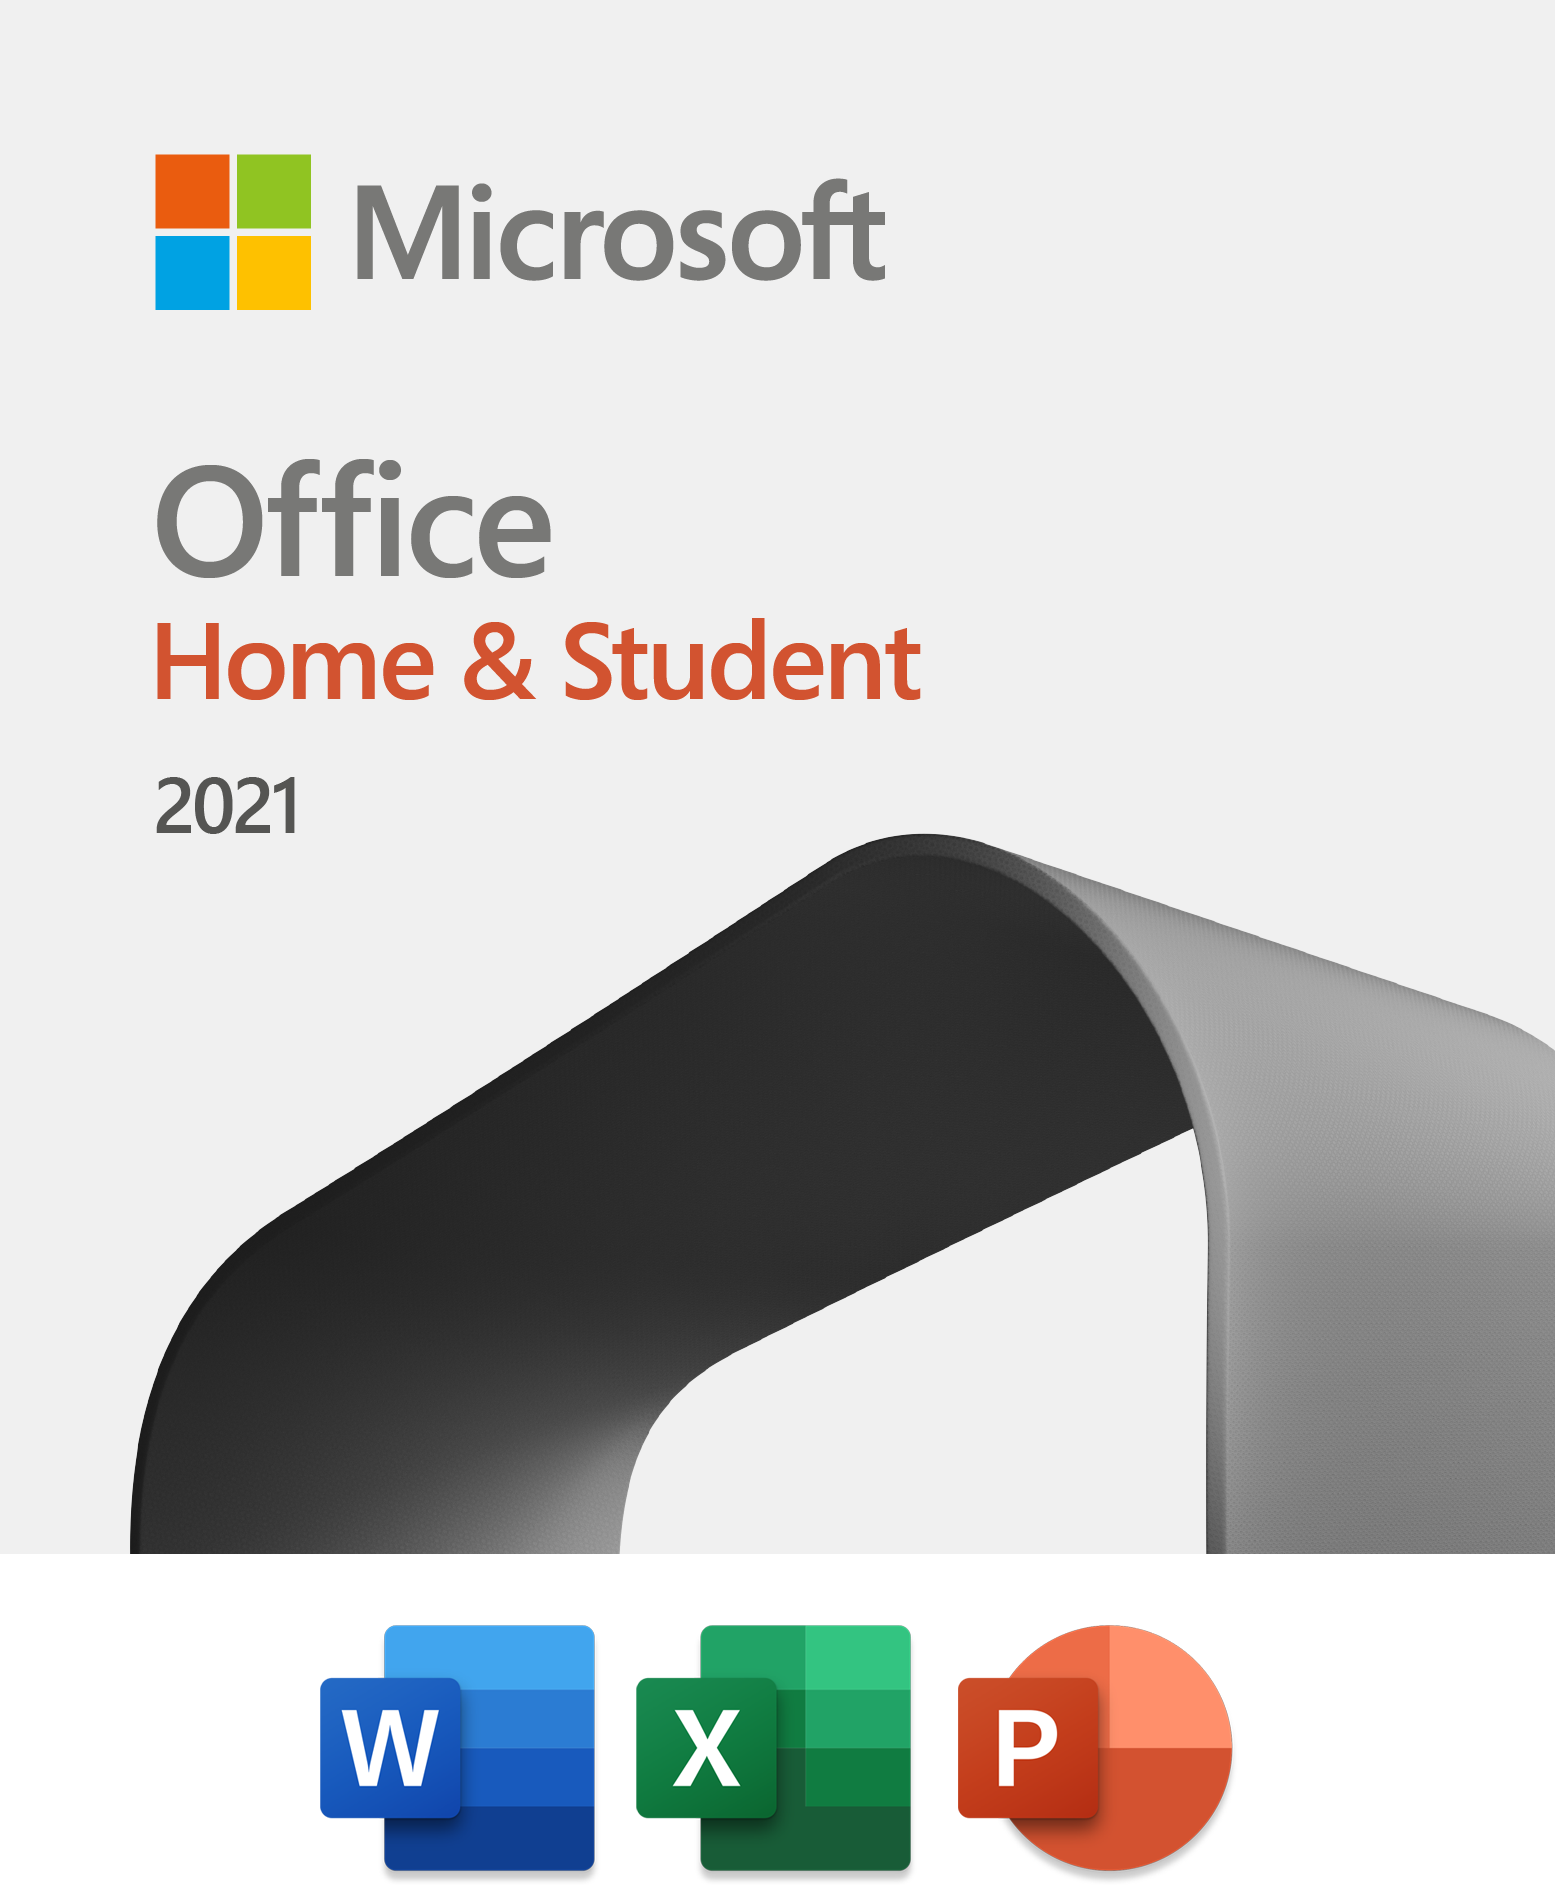 Microsoft Office Home & Student 2021 (1 Device) Mac OS, Windows 